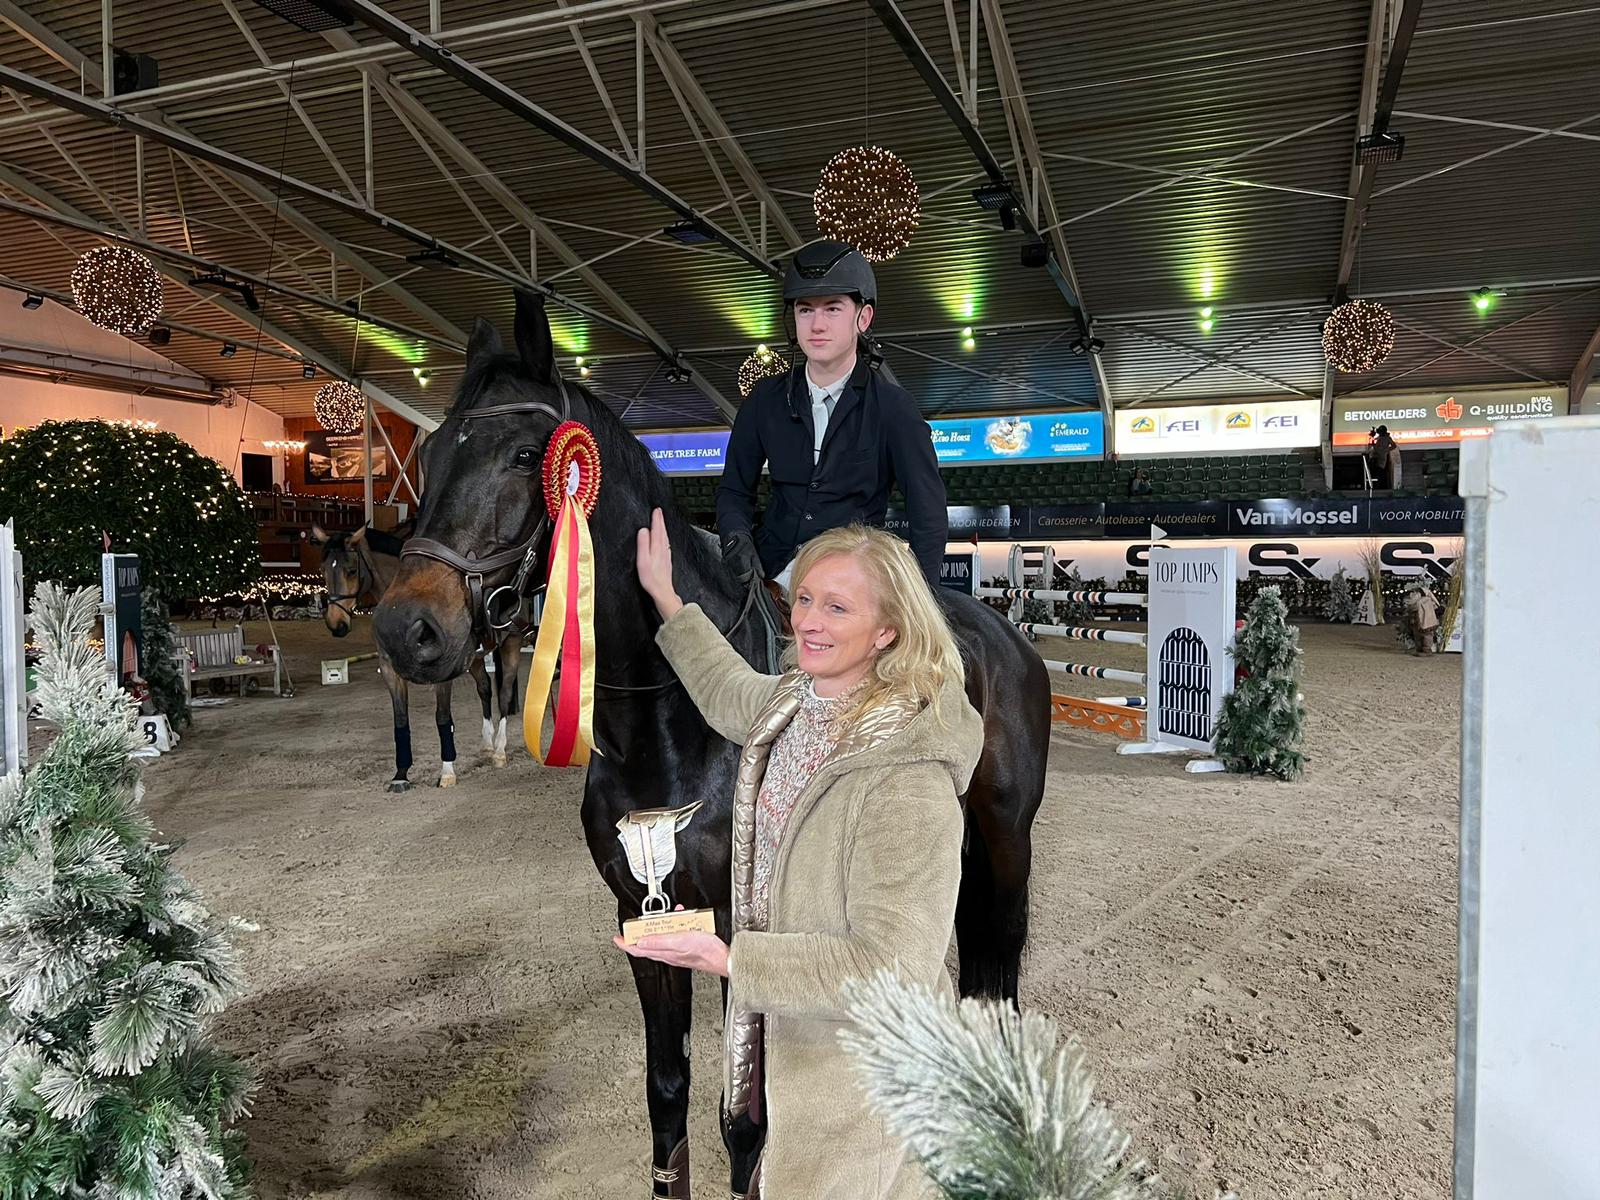 Siebe Leemans wint Grand Prix kwalificatie Lier!